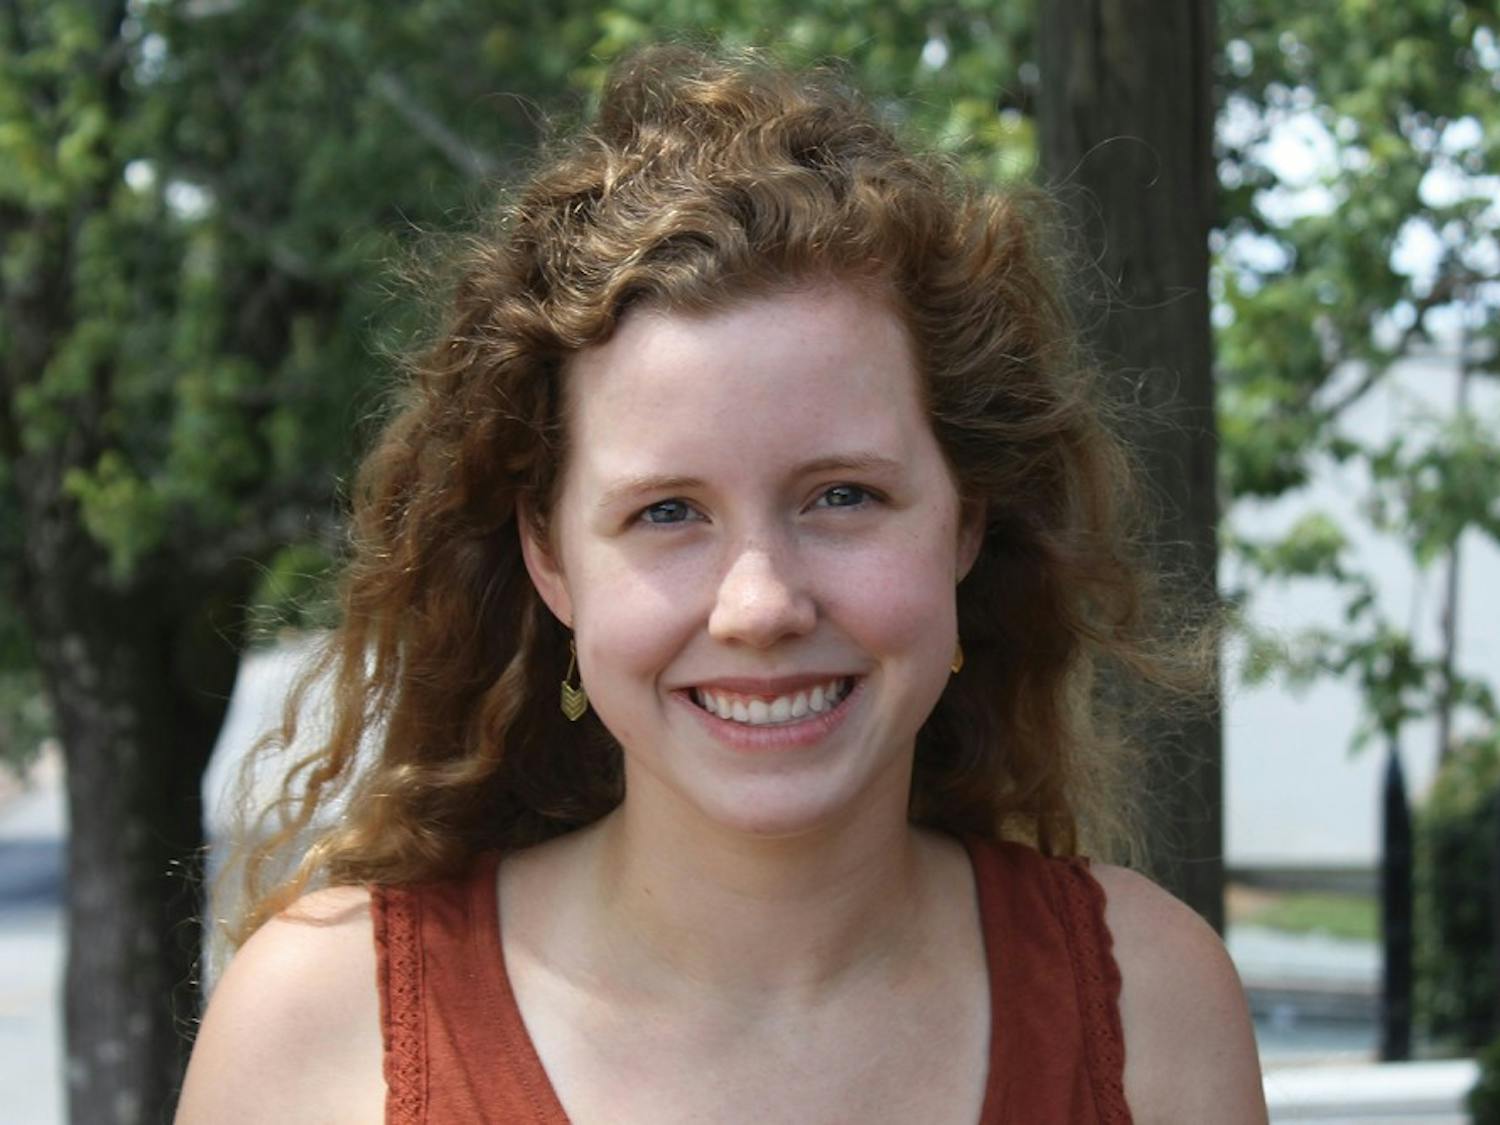 University editor Jane Wester